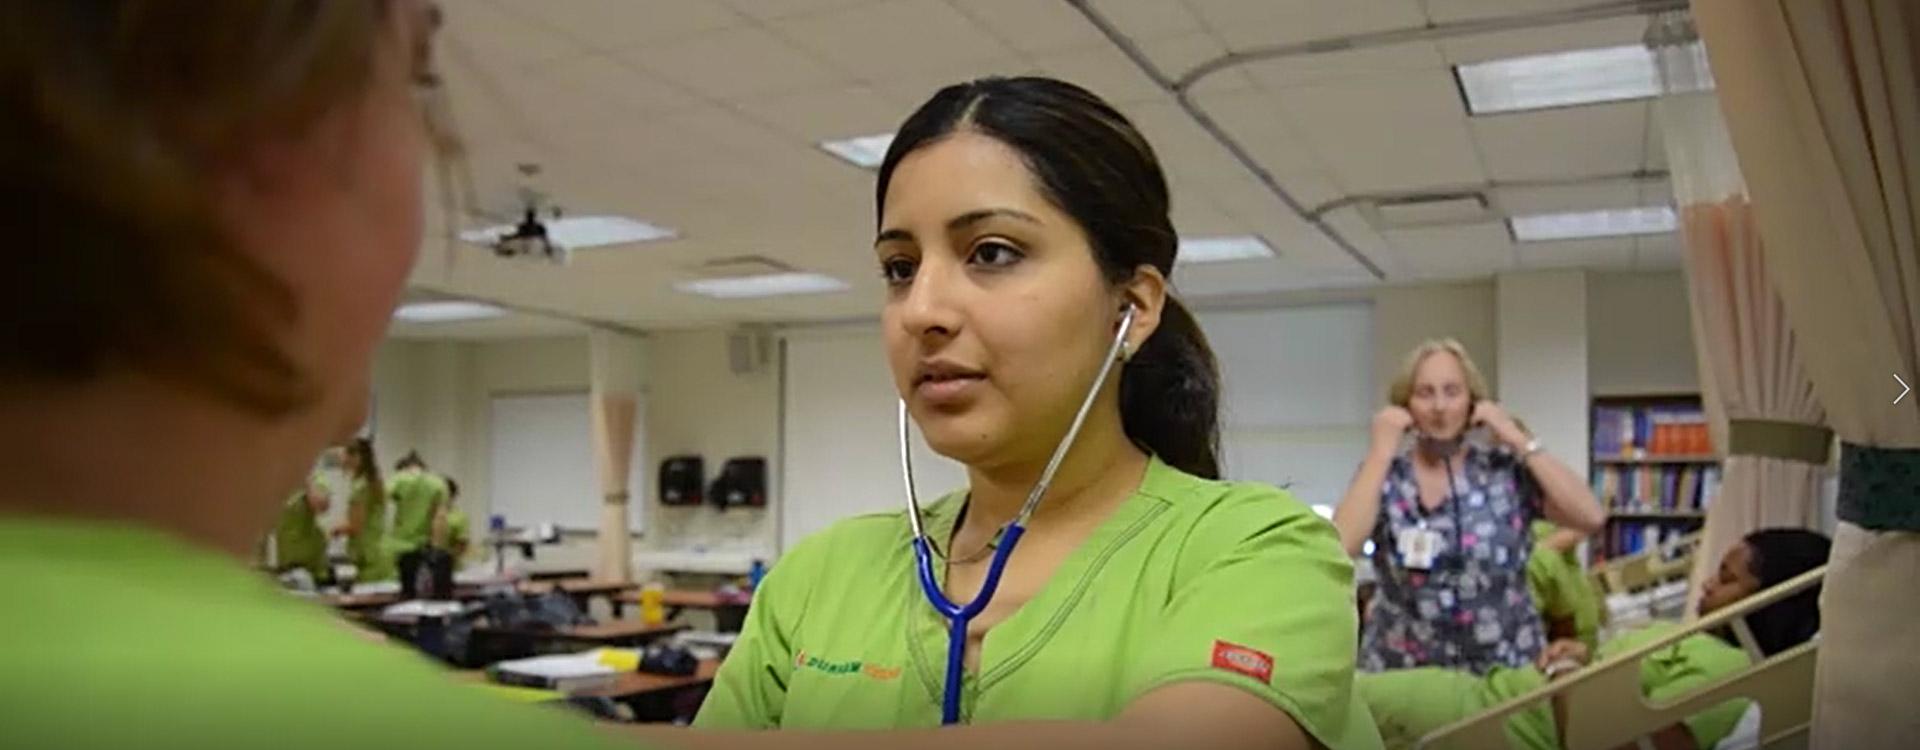 nursing student practices using stethescope in nursing lab